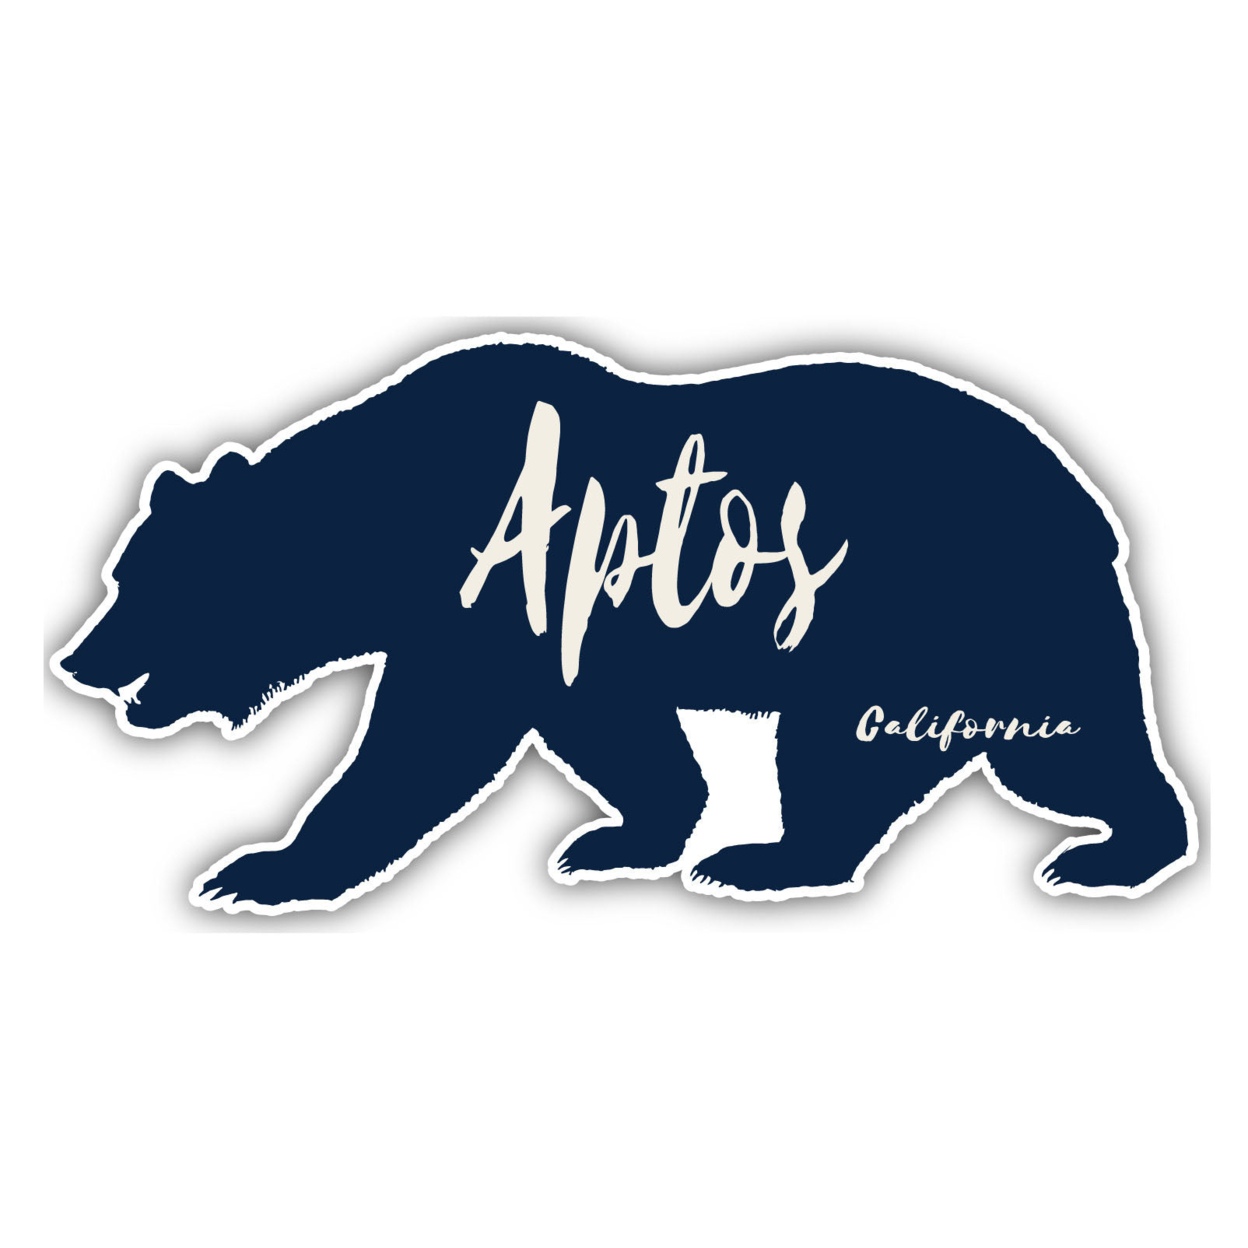 Aptos California Souvenir Decorative Stickers (Choose Theme And Size) - 4-Pack, 8-Inch, Adventures Awaits